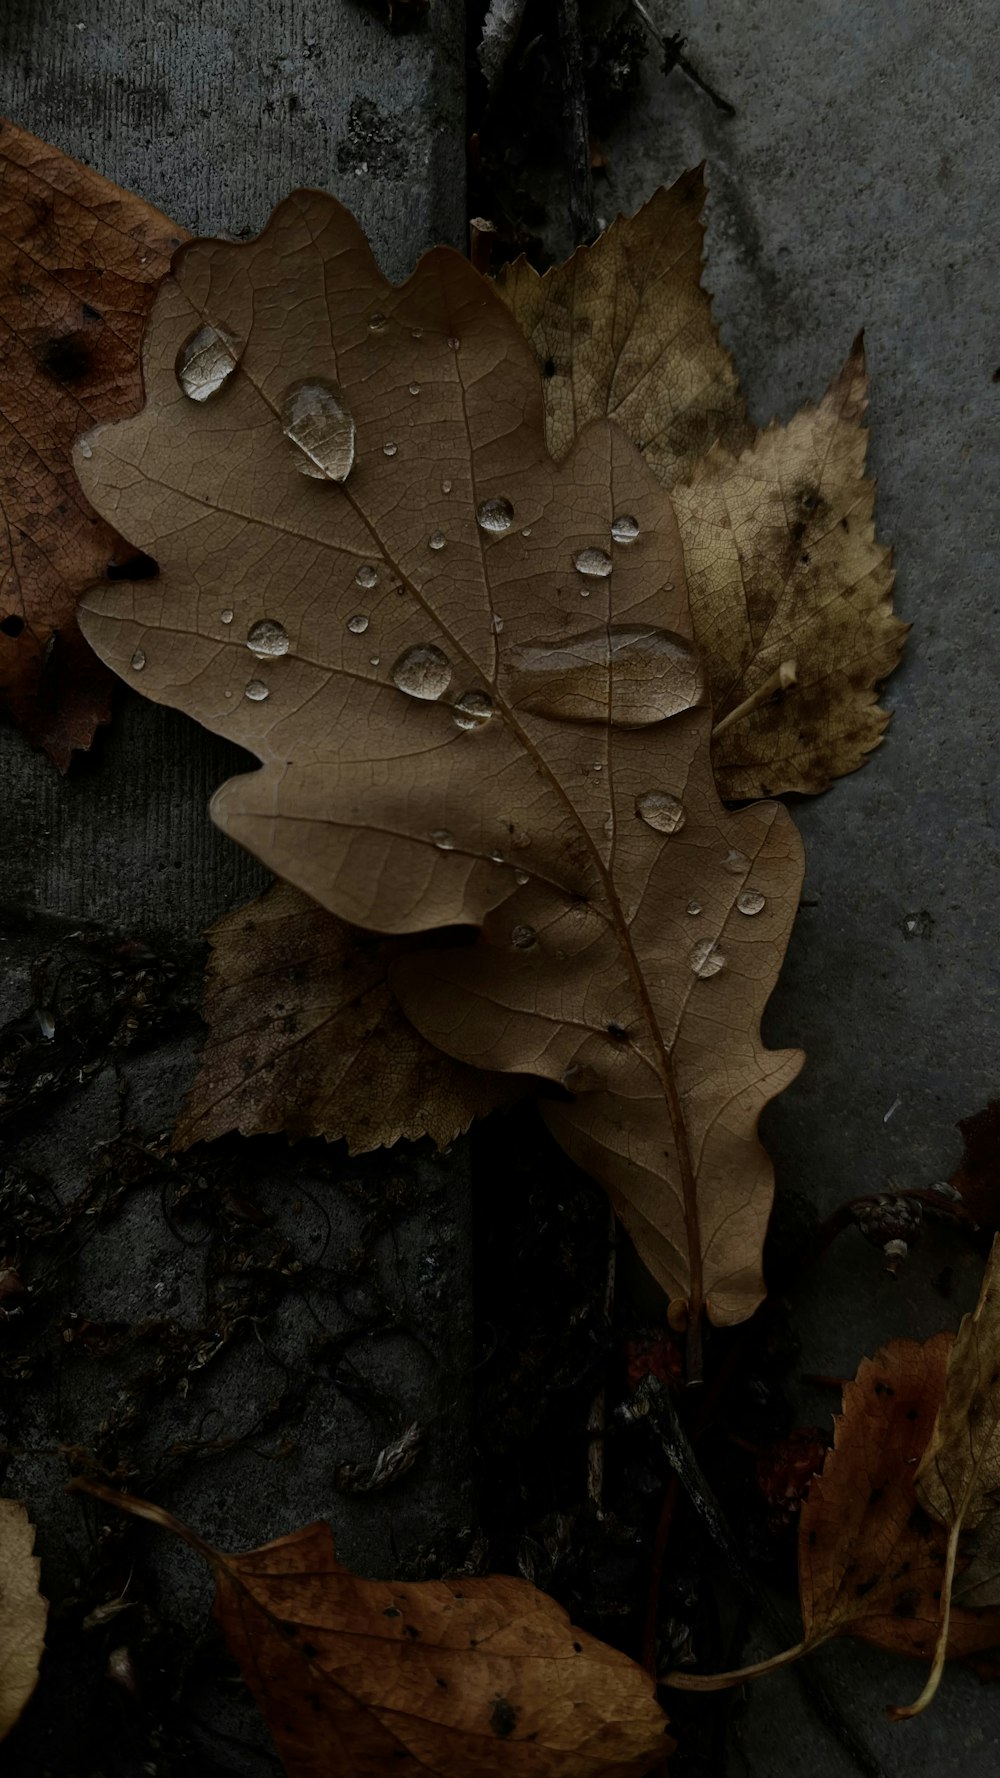 a leaf on the ground